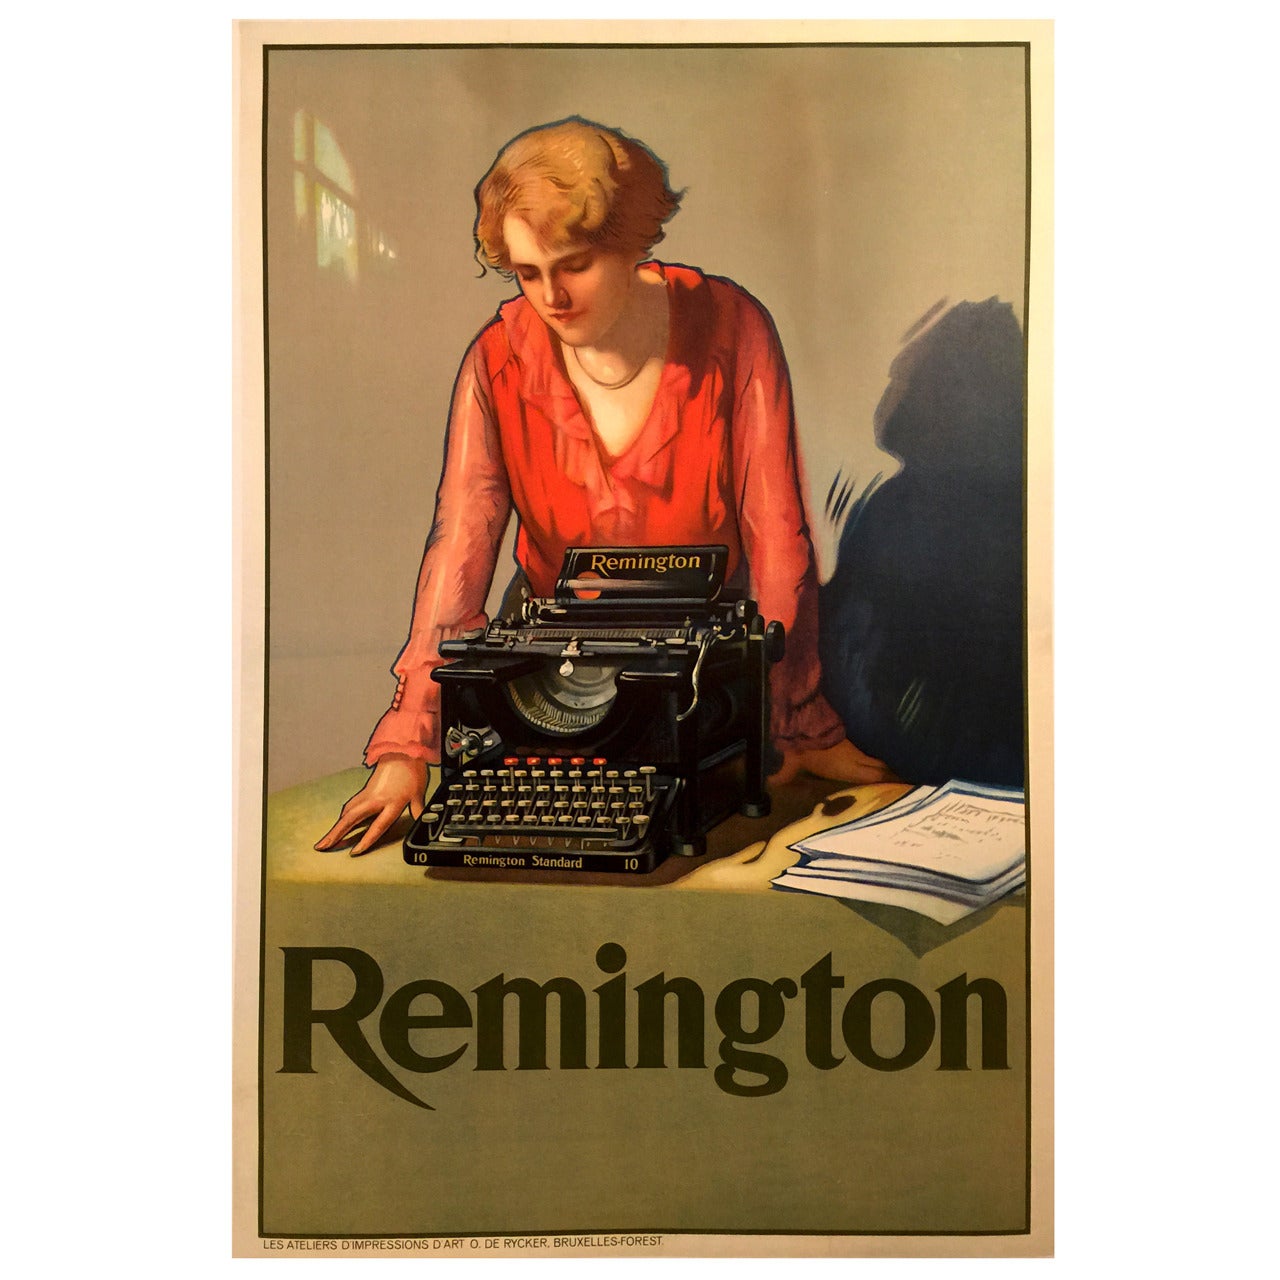 Belgian Art Nouveau Period Poster for Remington Typewriter, 1920